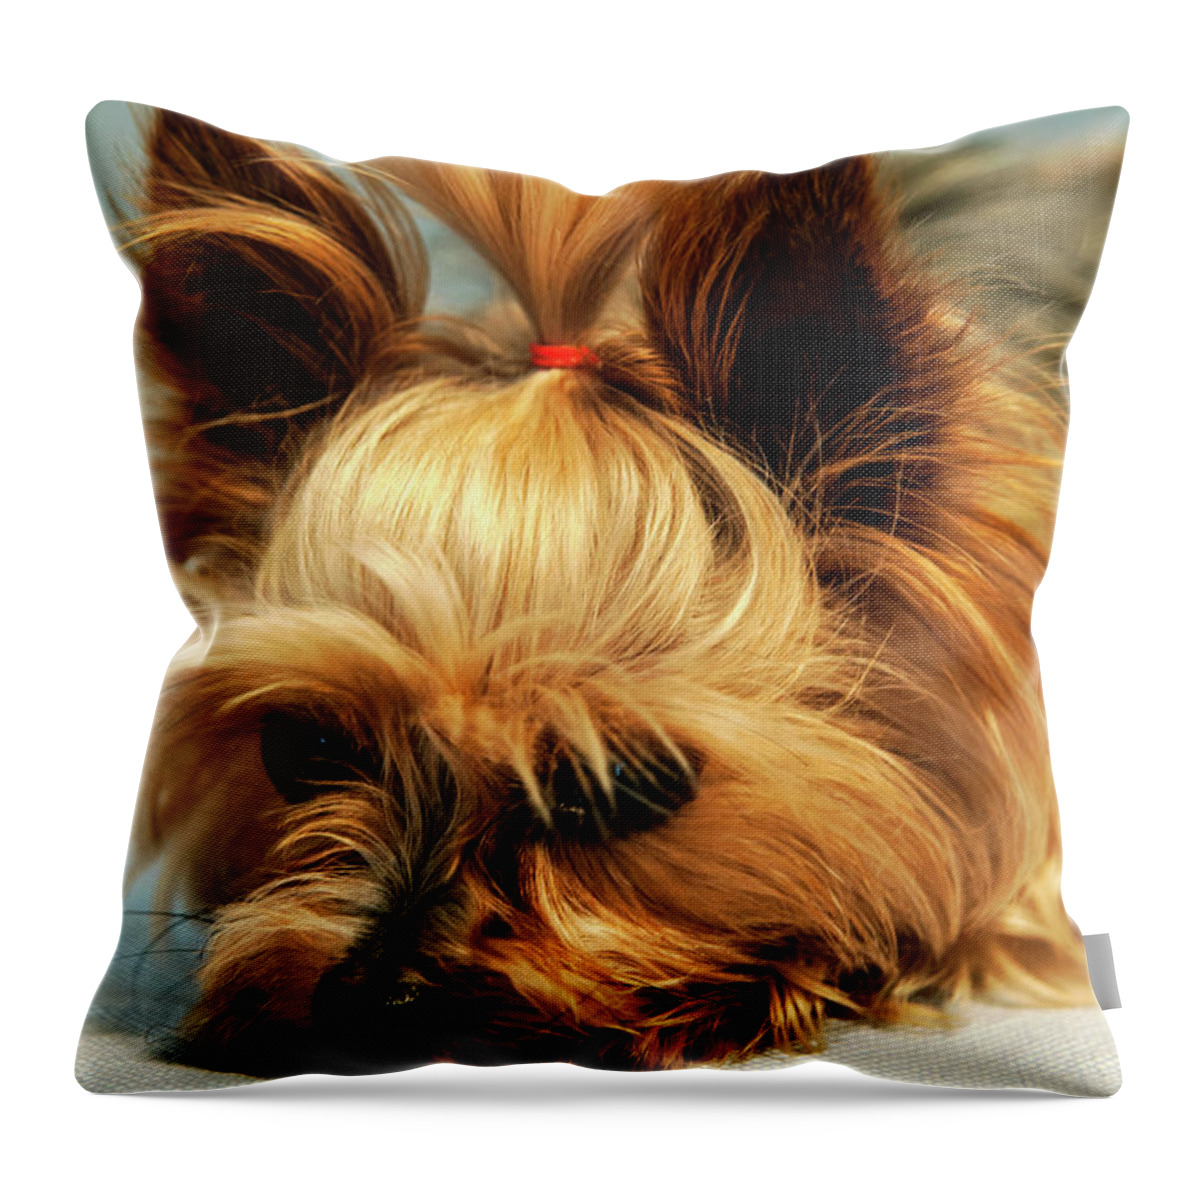 Estock Throw Pillow featuring the digital art Yorkshire Terrier by Glowcam